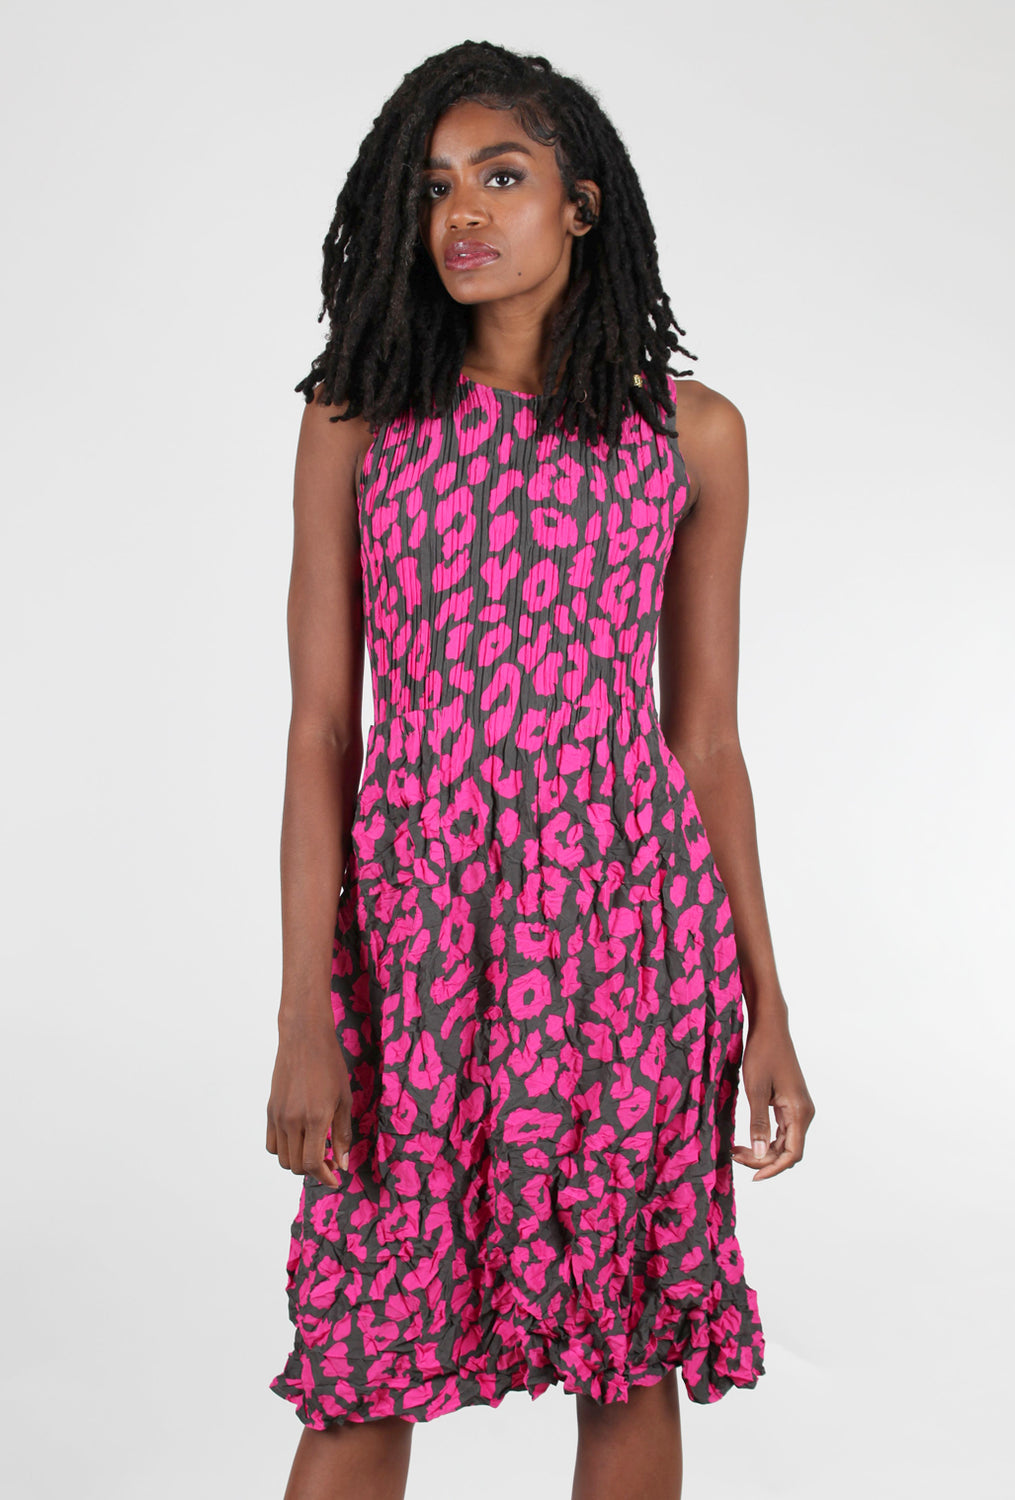 Alquema Smash Pocket Tank Dress, Pink Leopard 